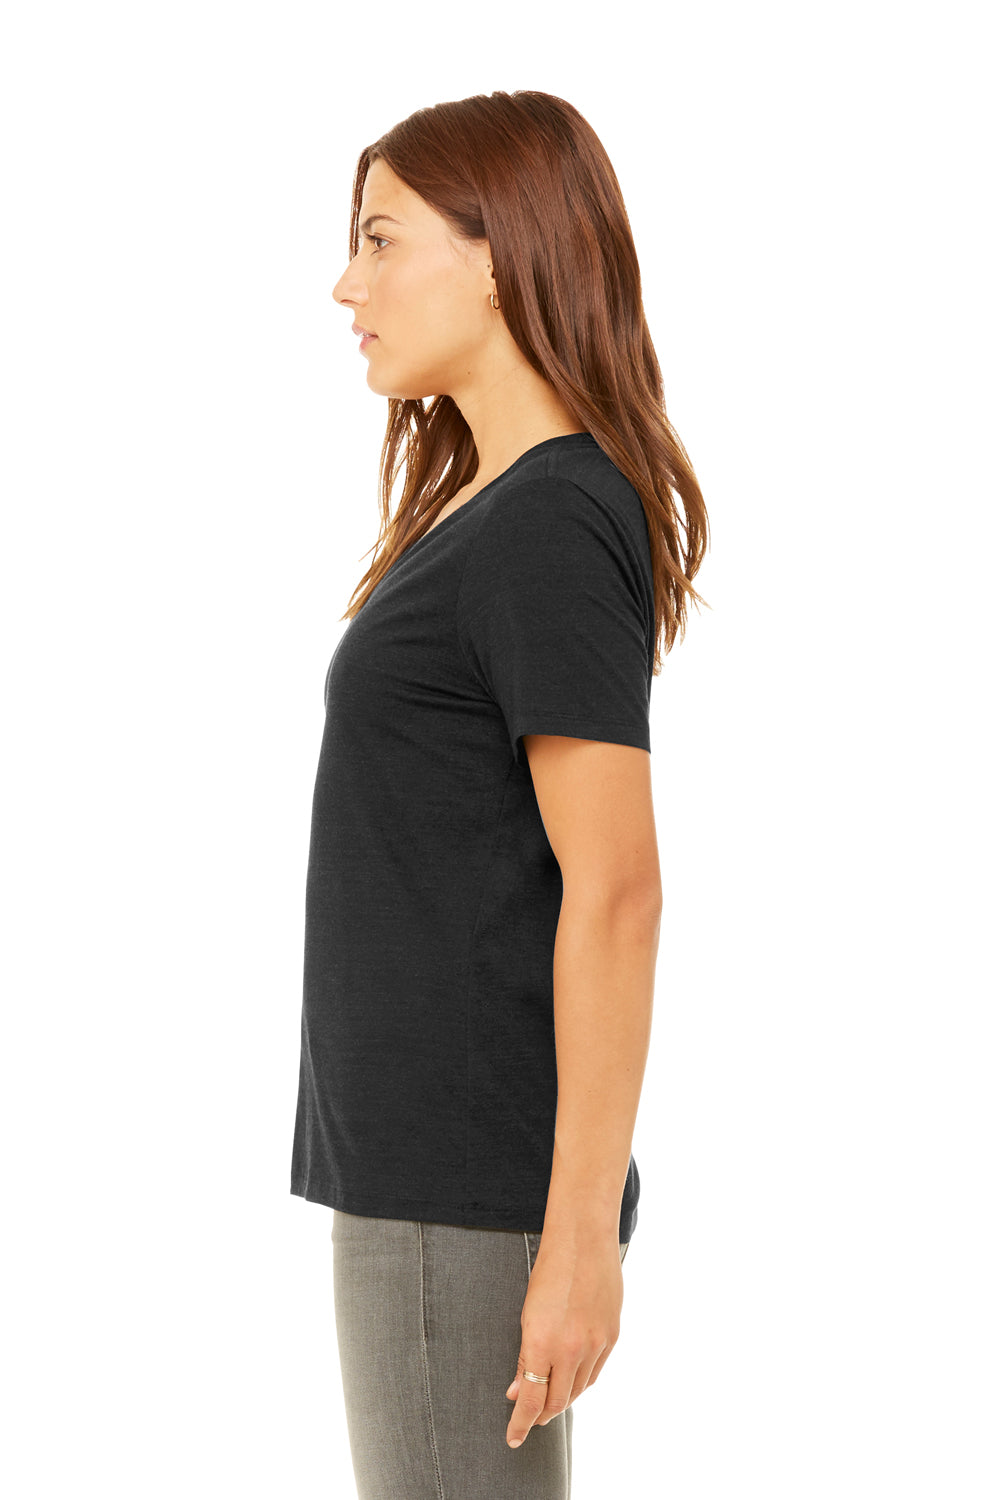 Bella + Canvas BC6405CVC Womens CVC Short Sleeve V-Neck T-Shirt Heather Black Model Side